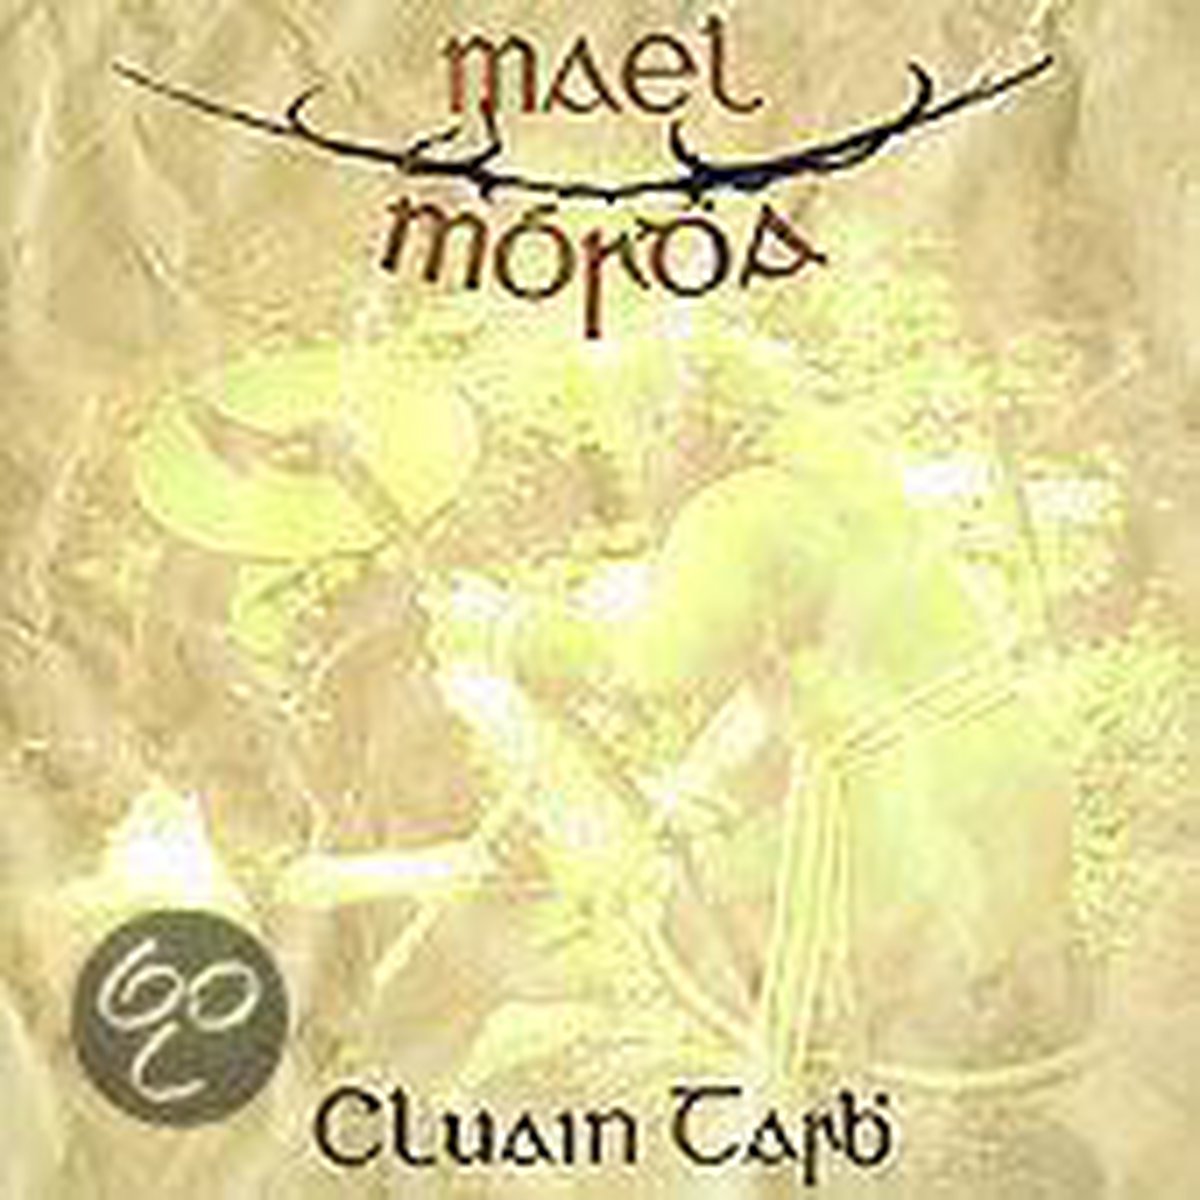 Cluain Tarb - Mael Mordha